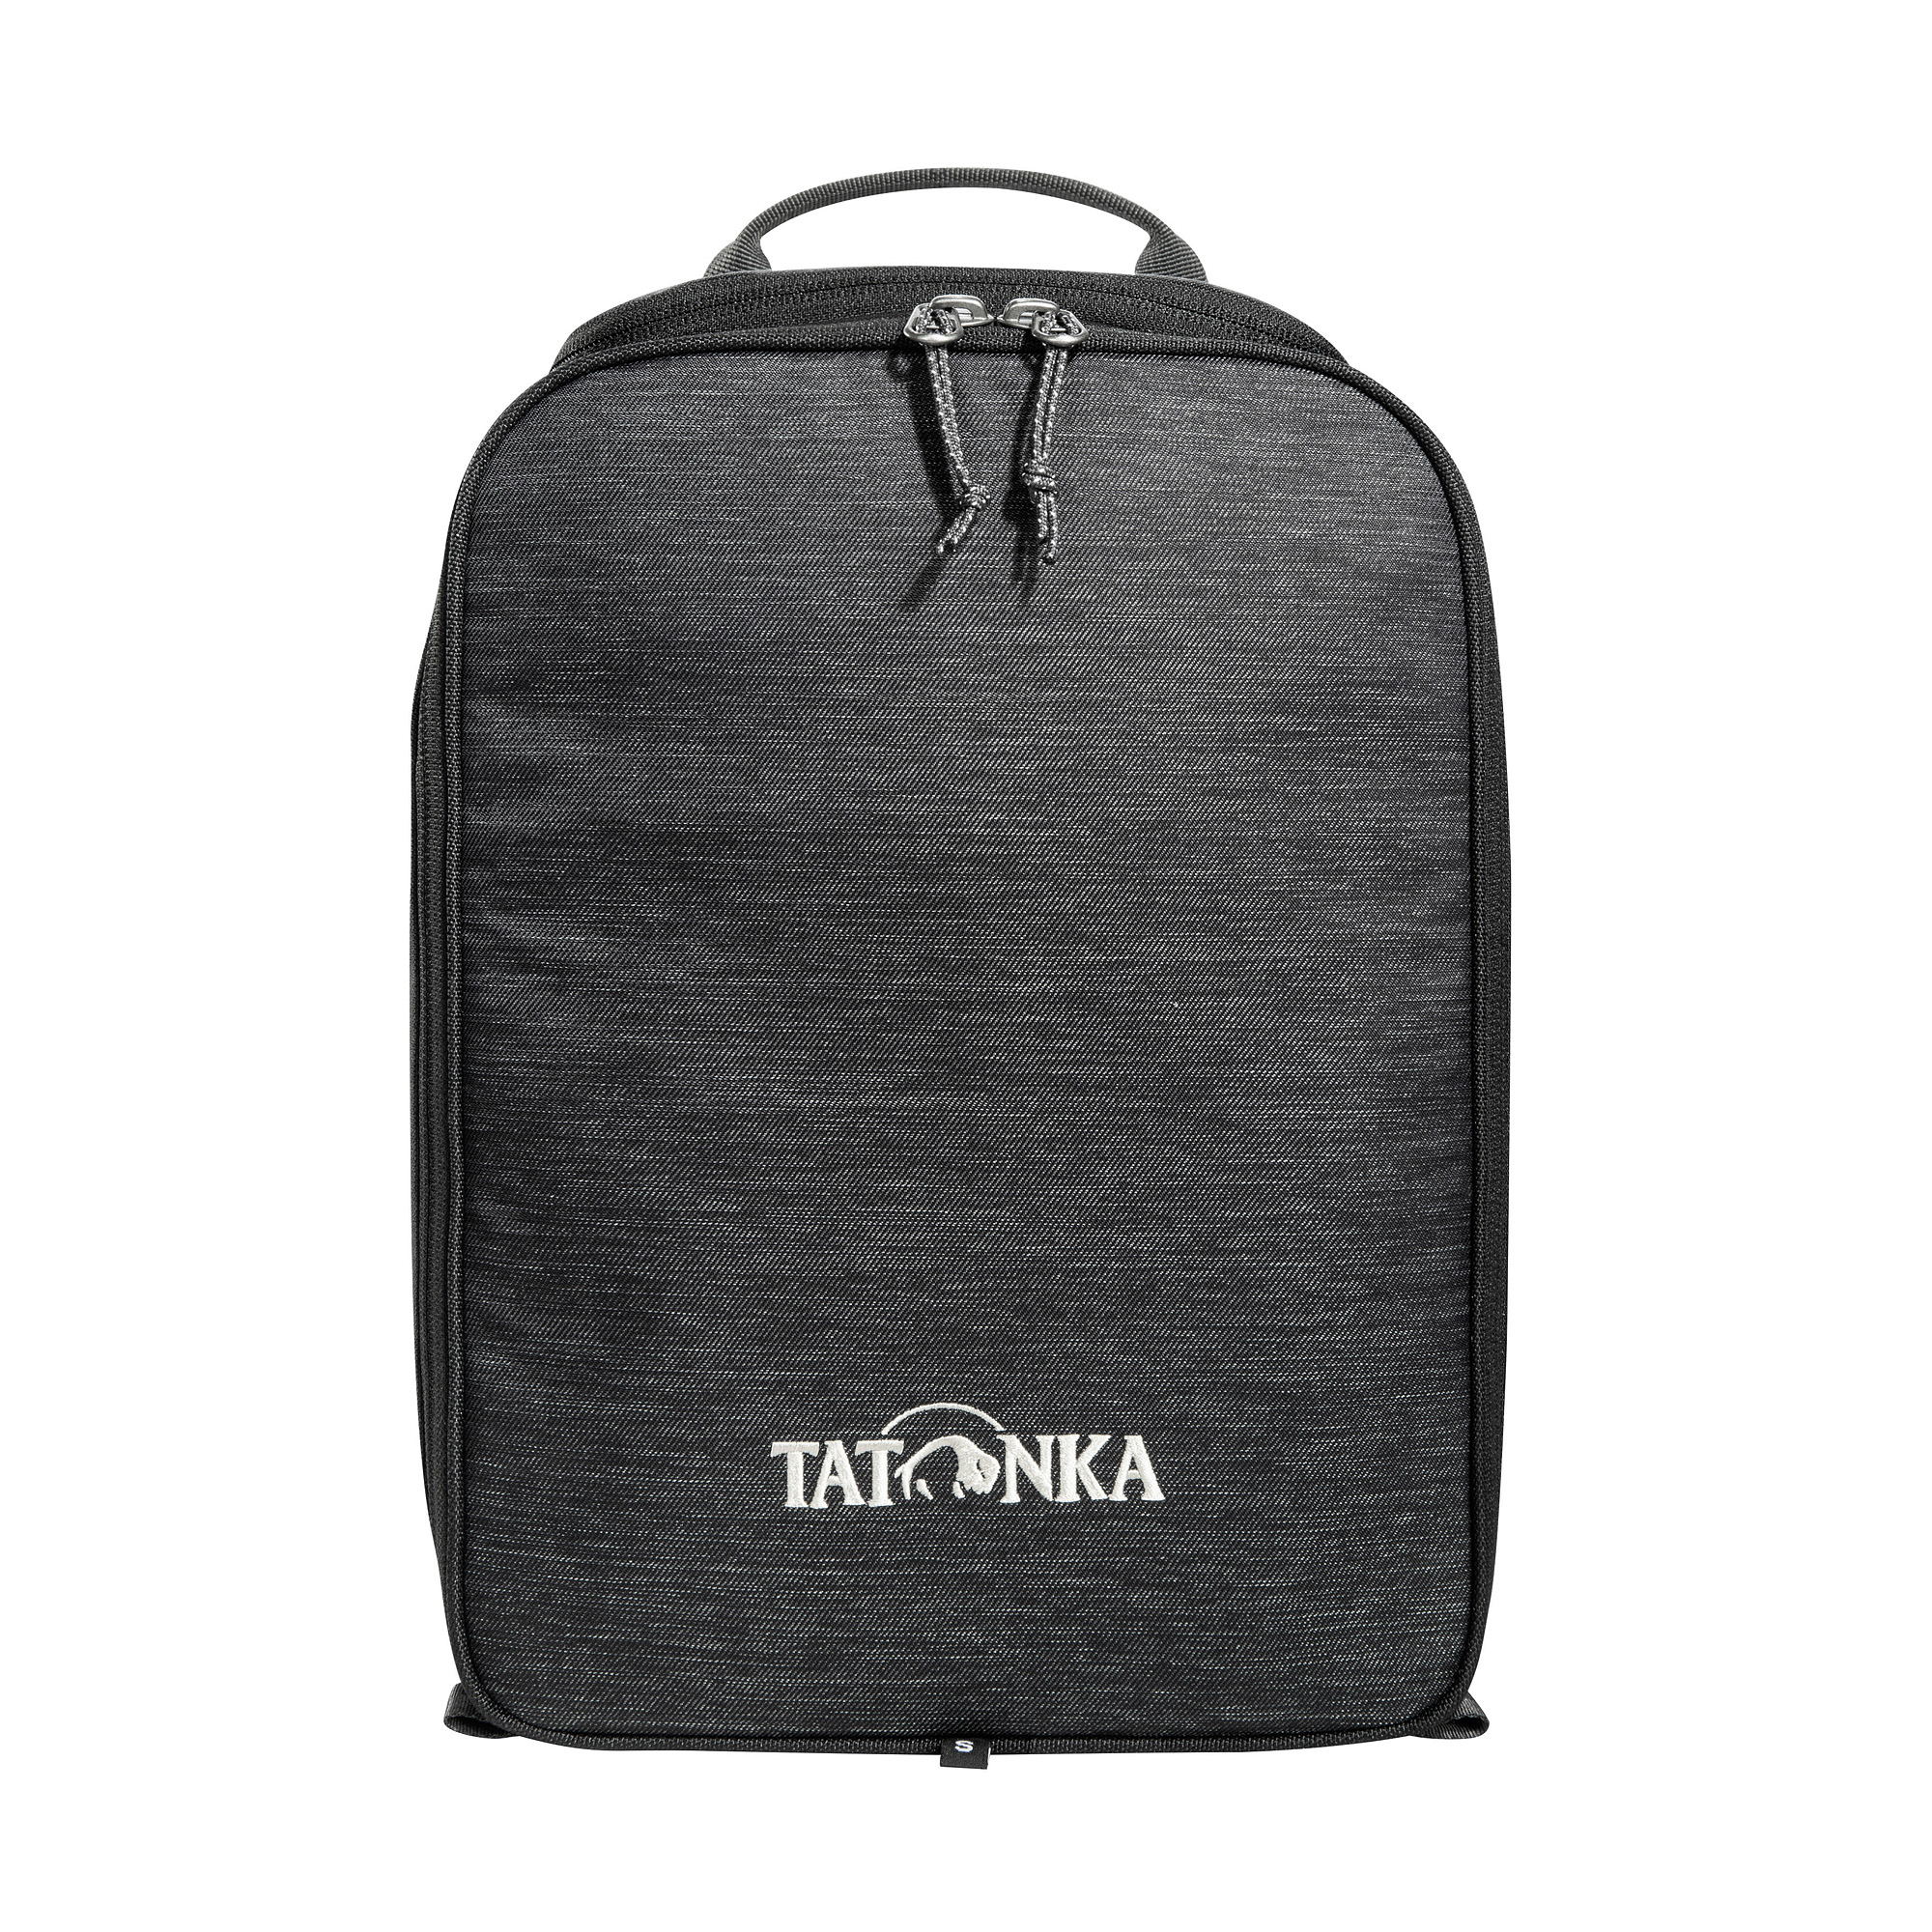 Термосумка Tatonka Cooler bag s 2913.220 серый